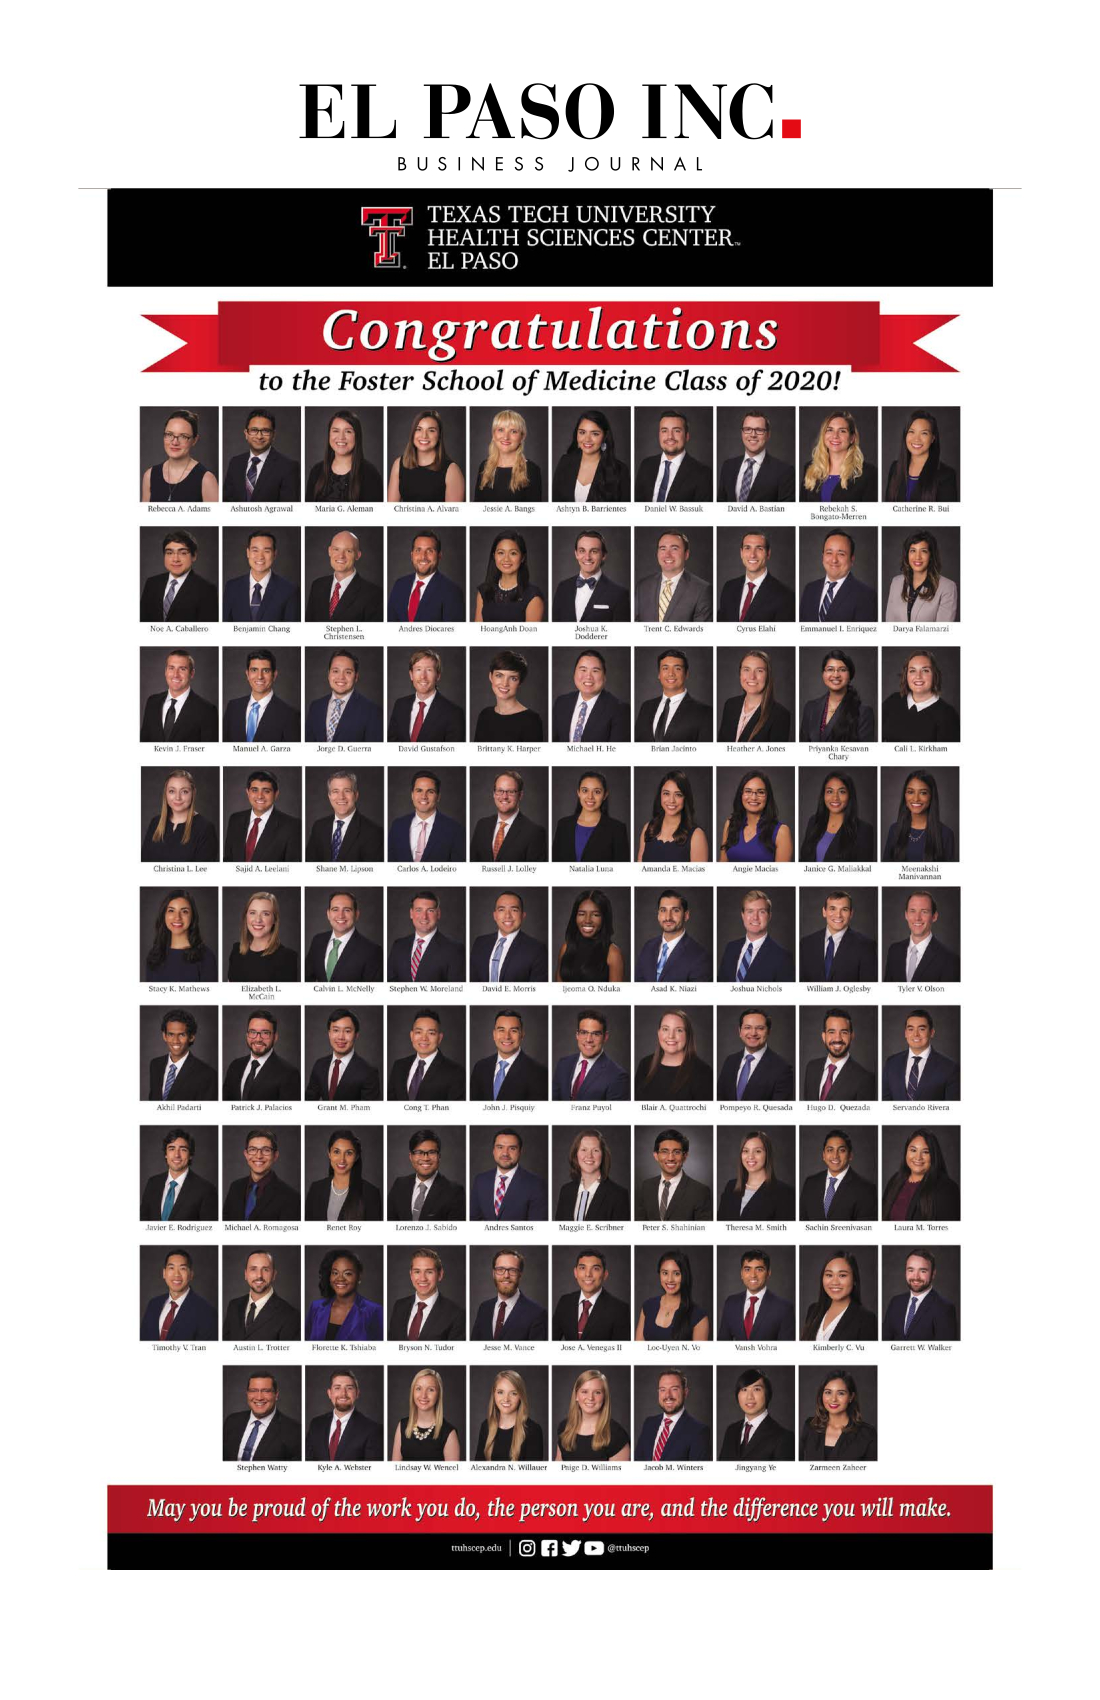  2020 FSOM Graduates